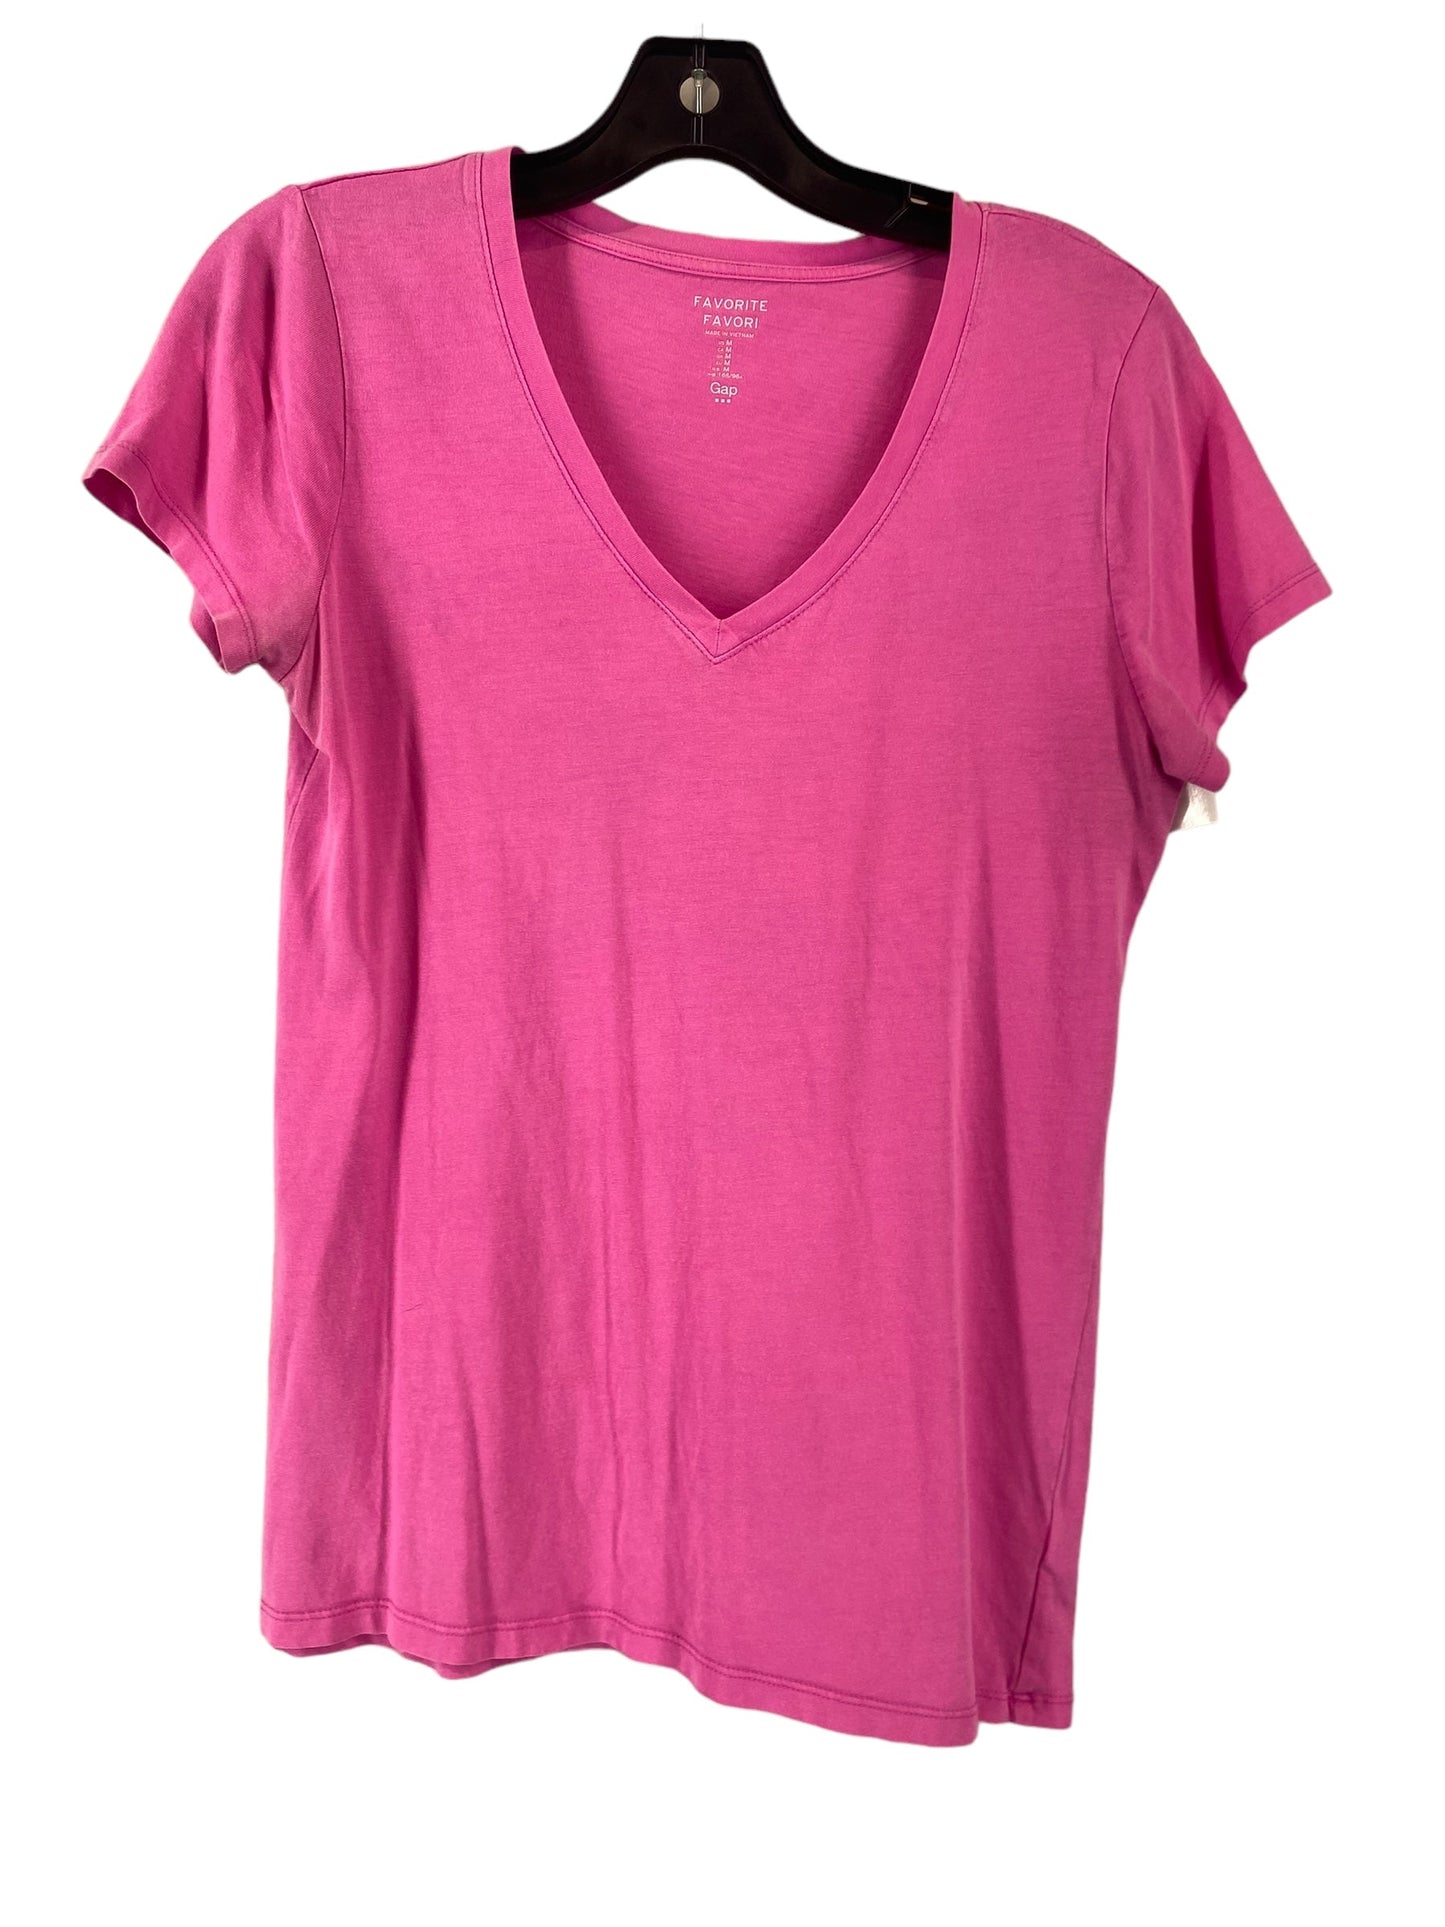 Pink Top Short Sleeve Basic Gap, Size M